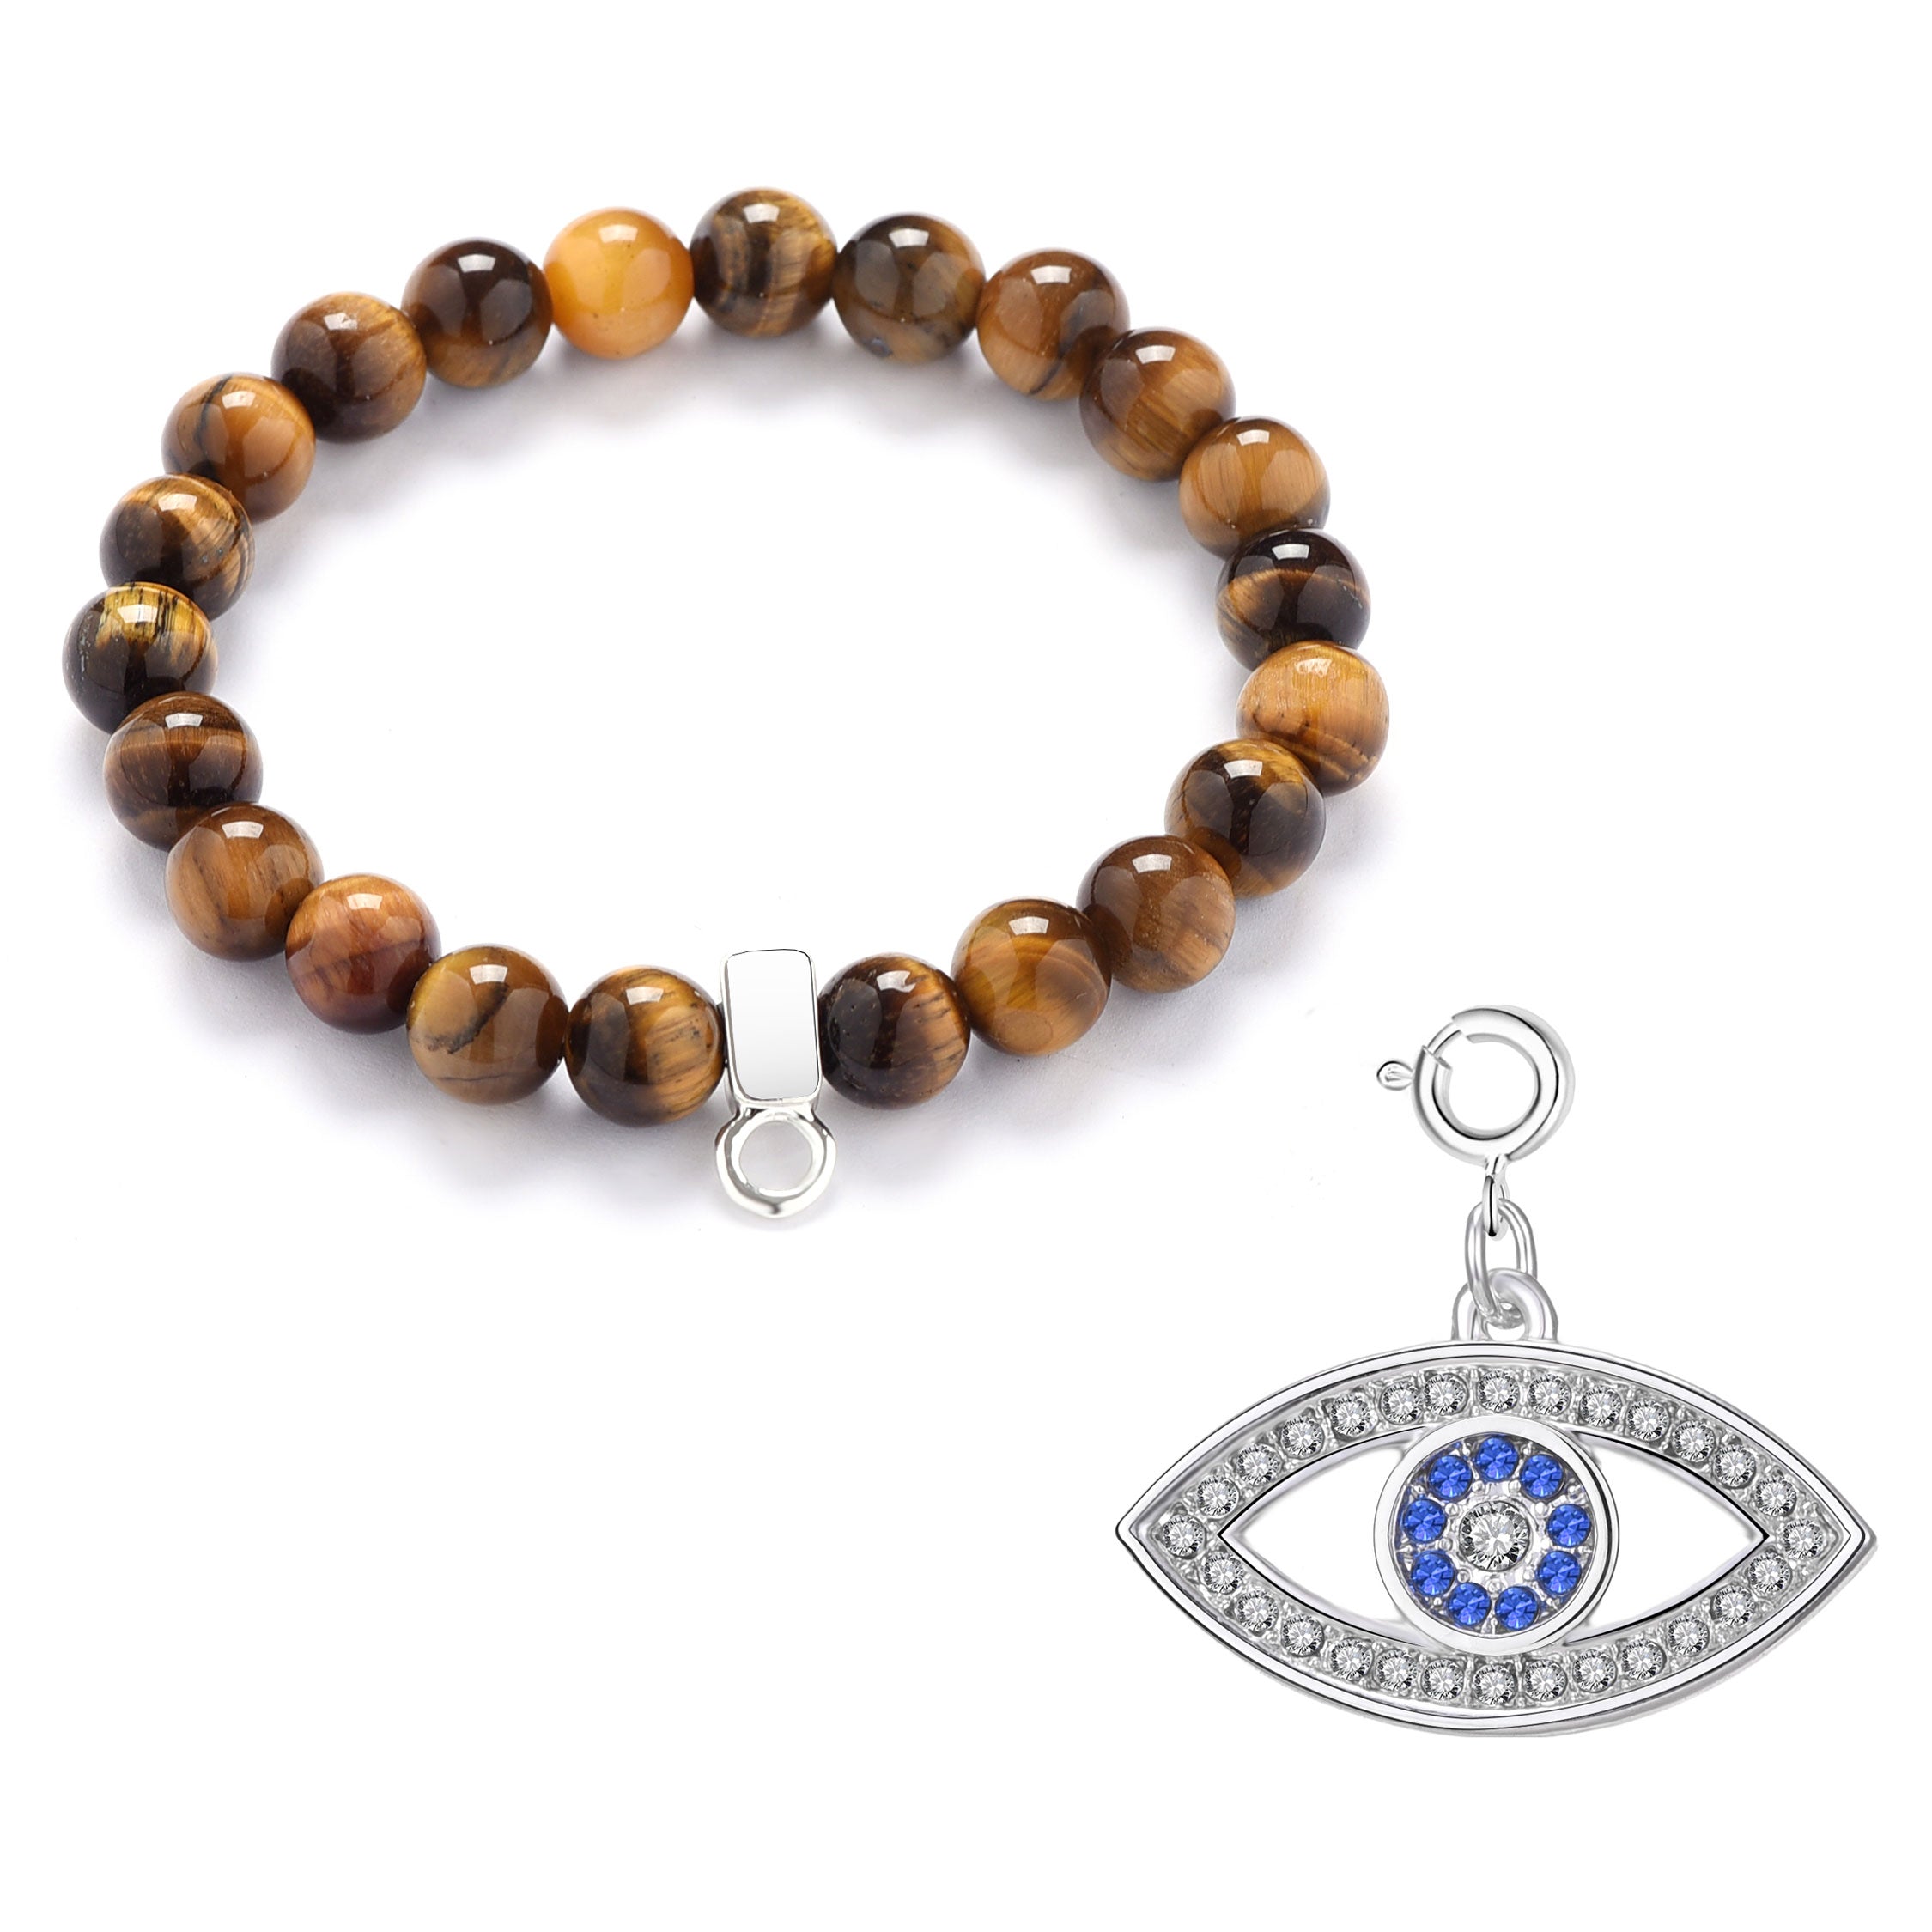 Tiger's Eye Gemstone Charm Stretch Bracelet with Charm Created with Zircondia® Crystals